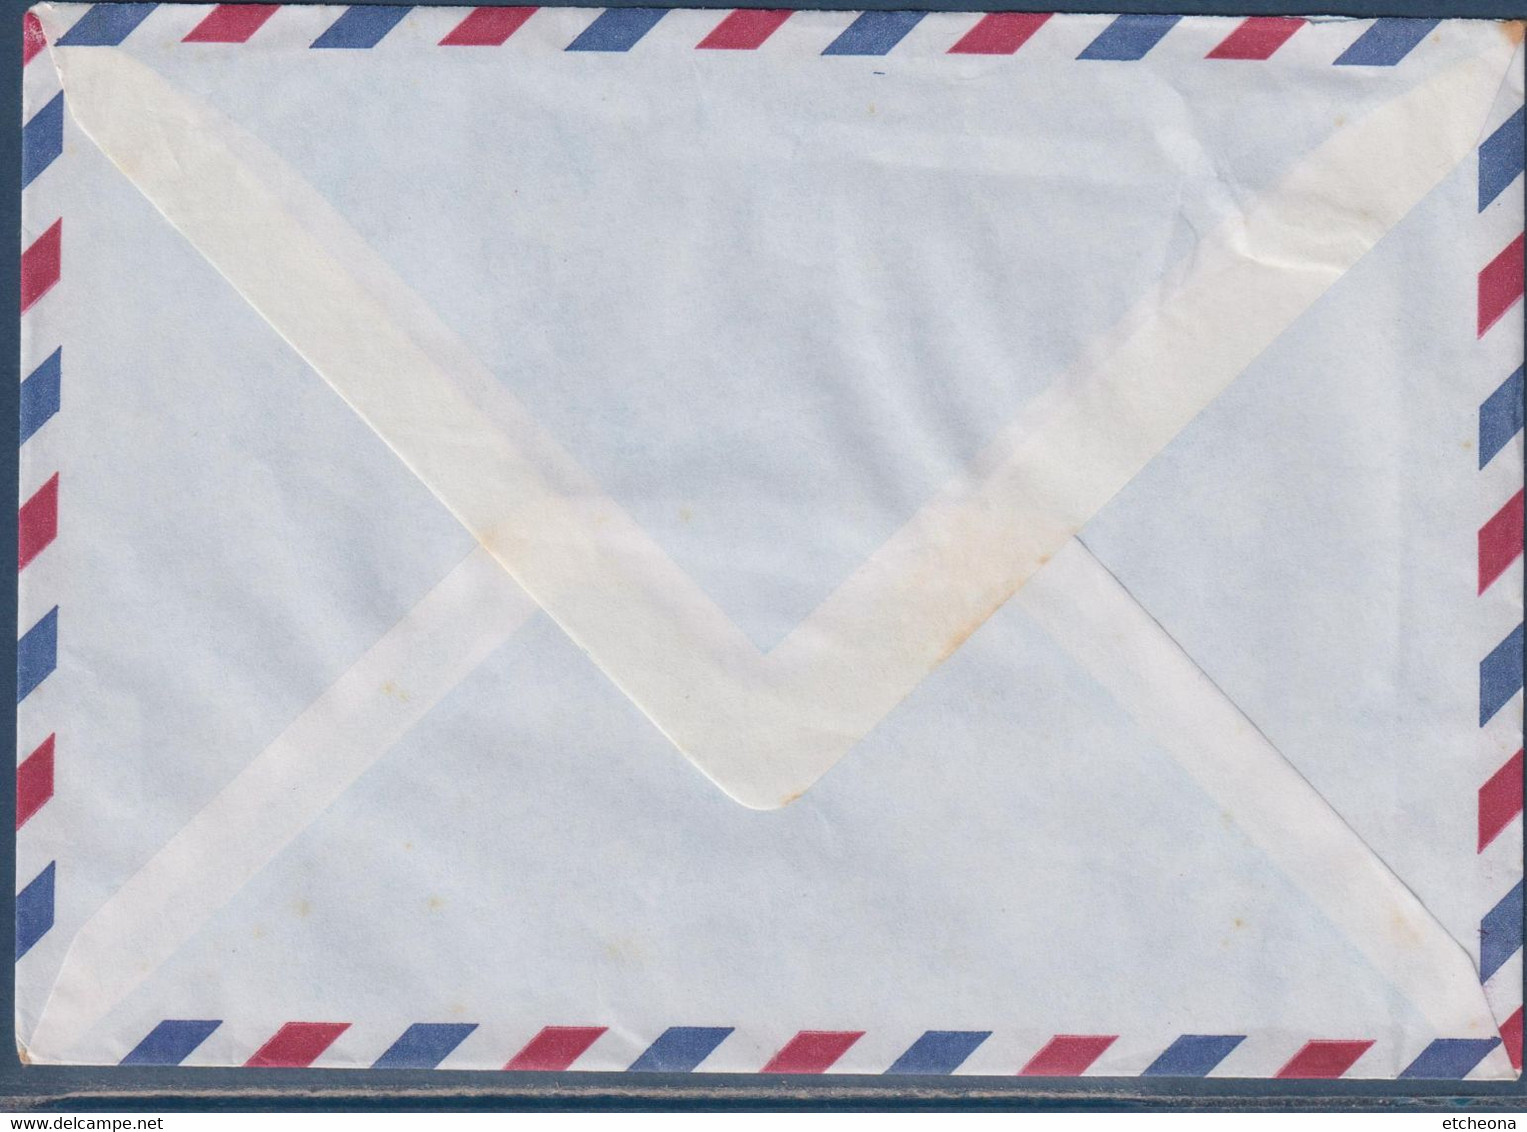 Enveloppe De Polynésie Punaauia Tamanu, Tahiti, 29.05.95 Avec Timbre N°462 - Lettres & Documents